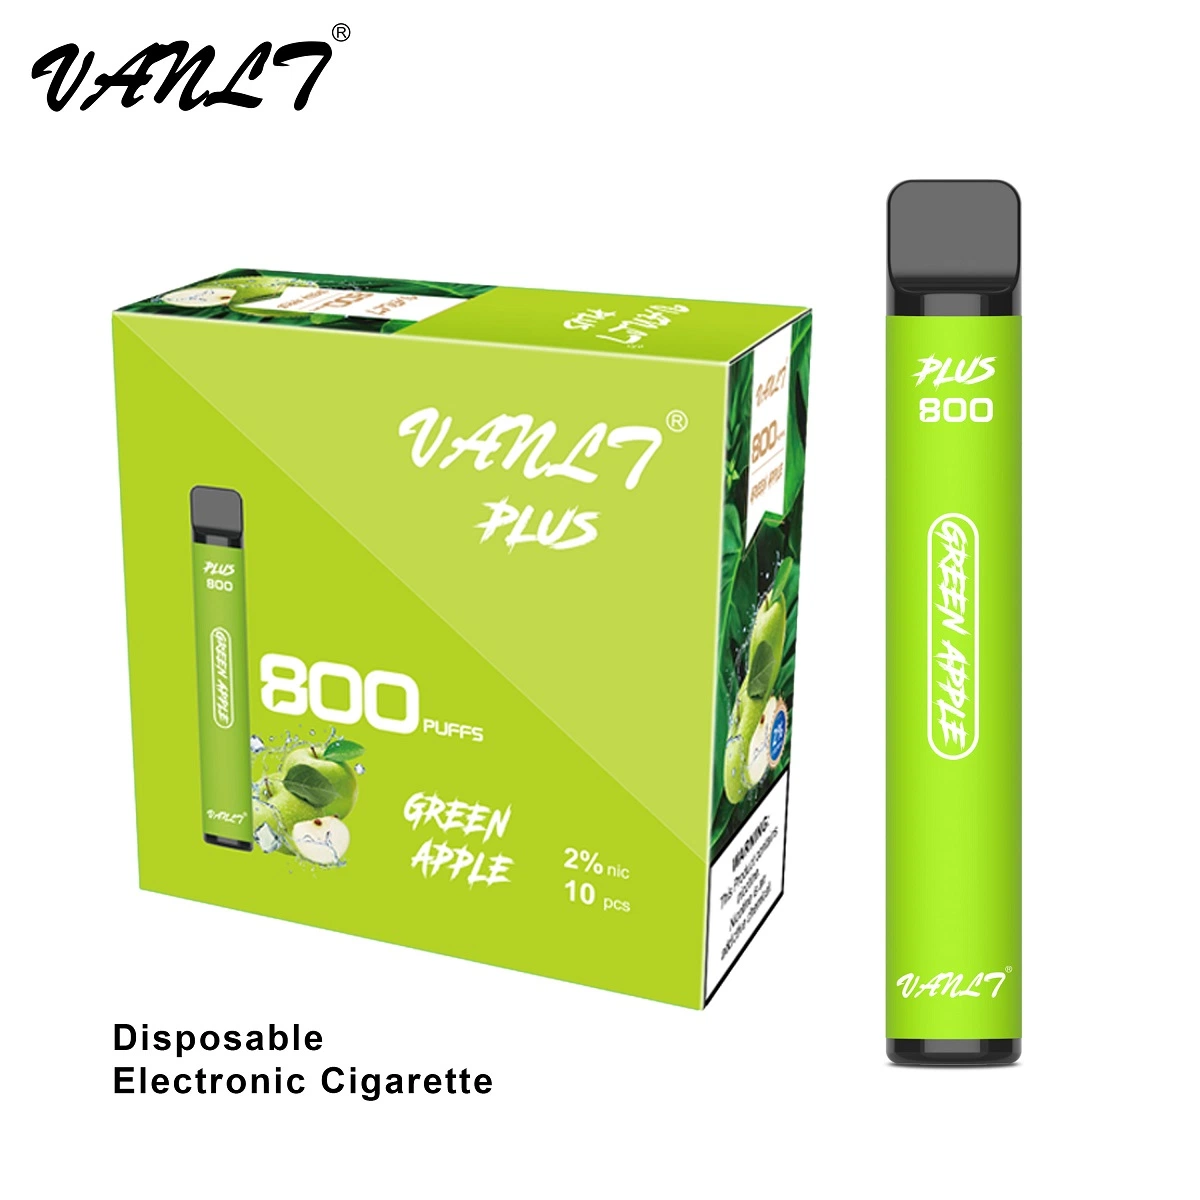 Smooth Smoke Disposable Vanlt Plus Vape Pen 800 Puff Plus 2ml E-Liquid 550mAh Battery